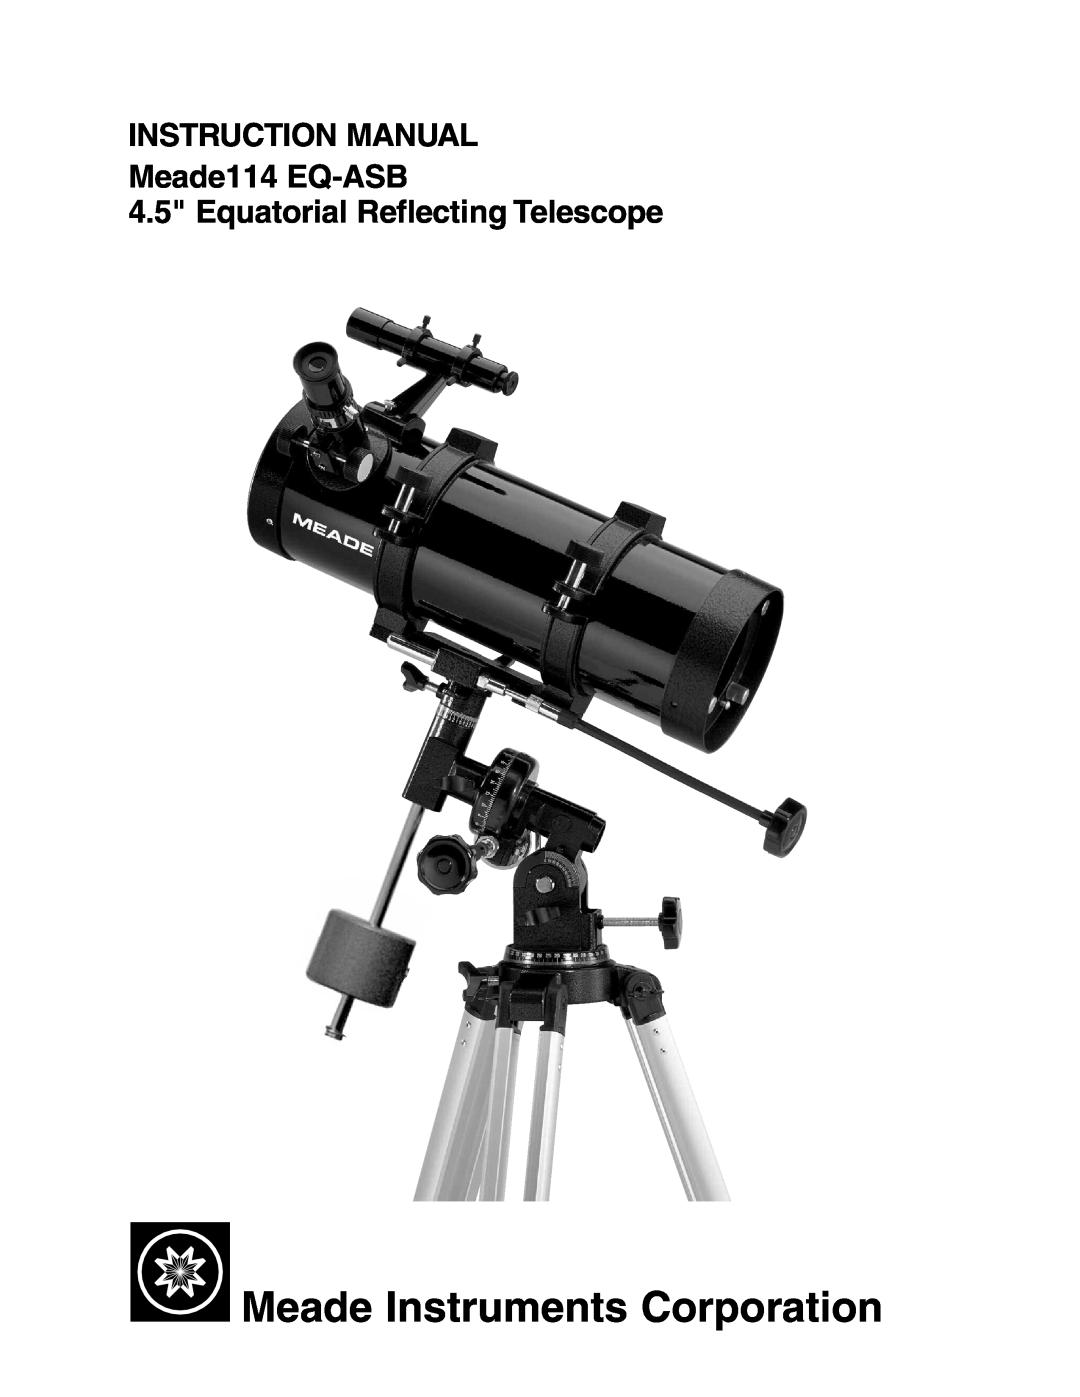 Meade 114 EQ-ASB instruction manual Equatorial Reflecting Telescope, Meade Instruments Corporation 